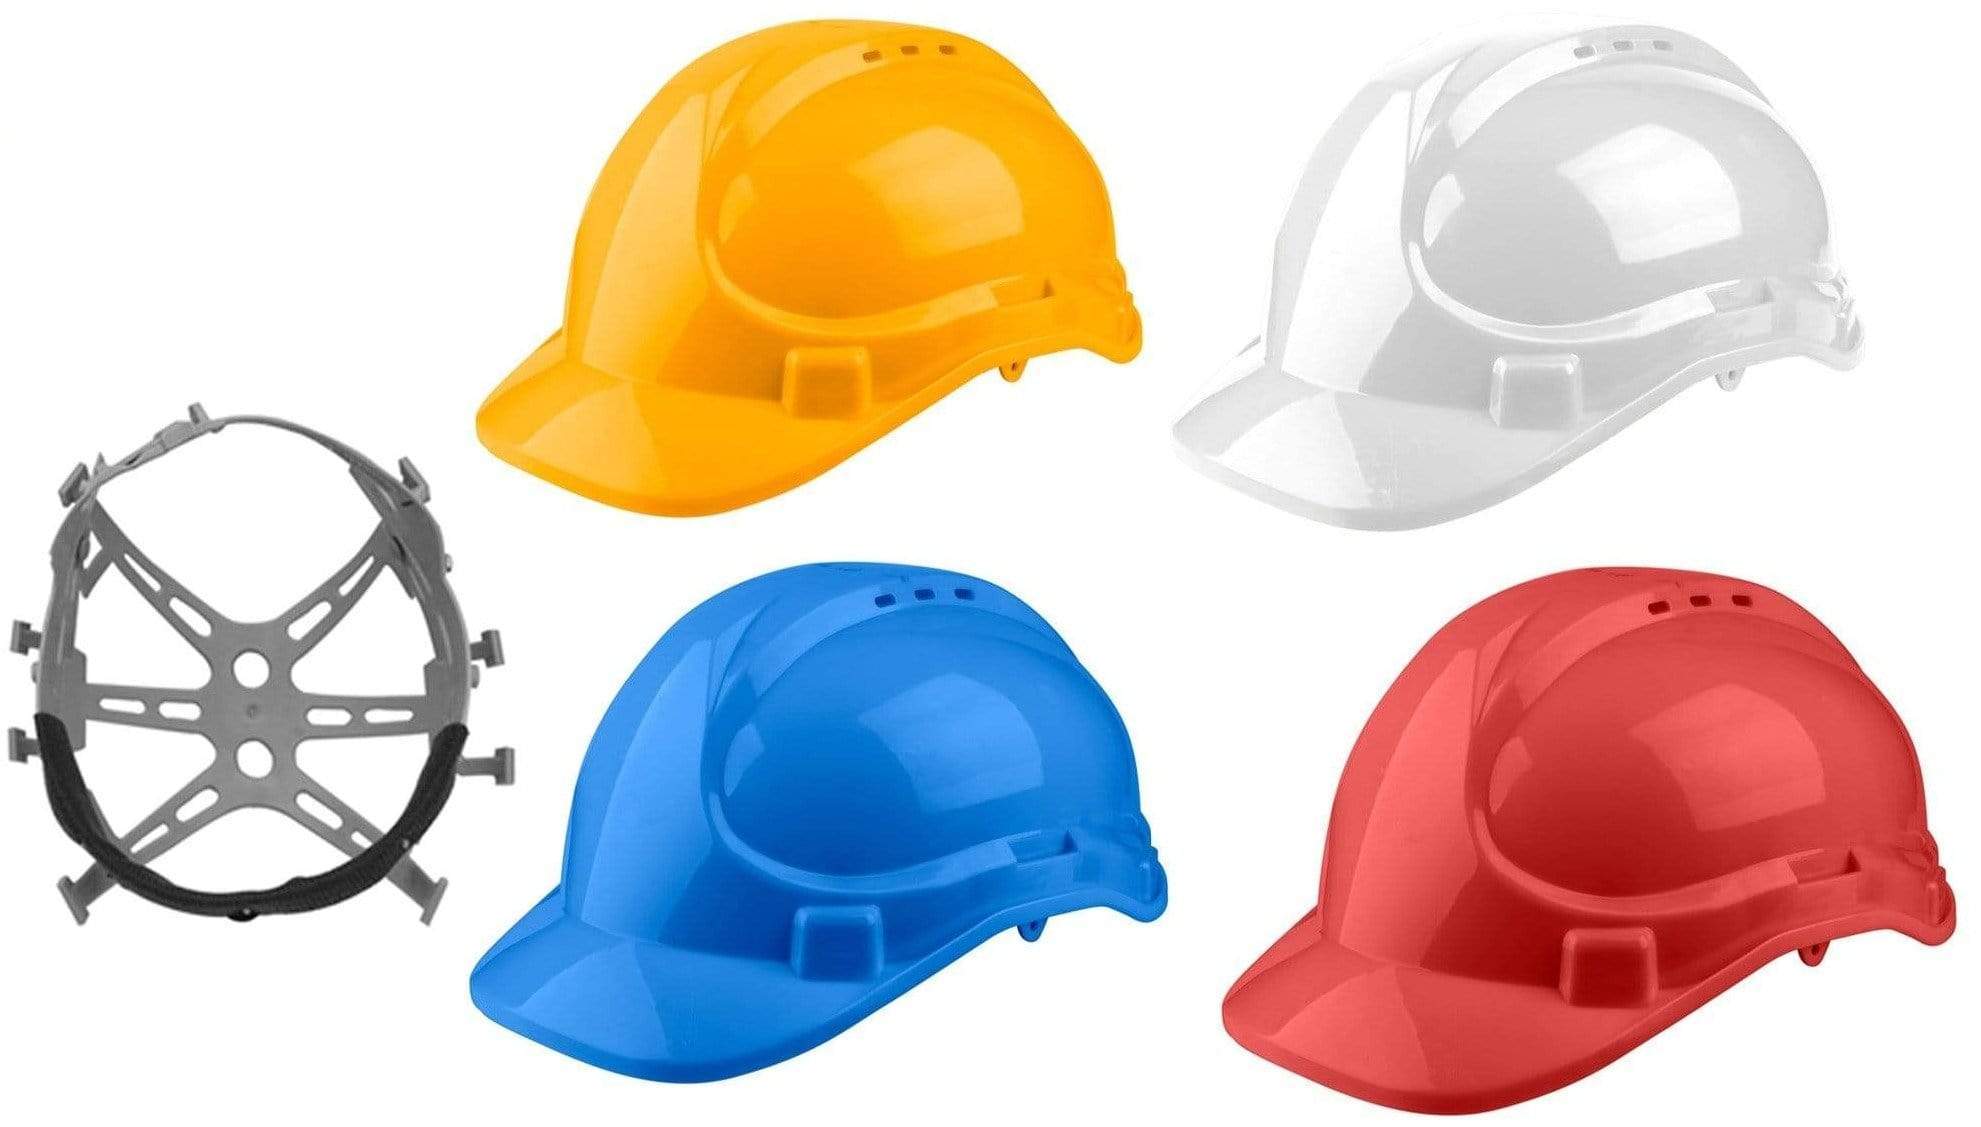 Ingco Safety Helmets | Supply Master | Accra, Ghana Tools Building Steel Engineering Hardware tool